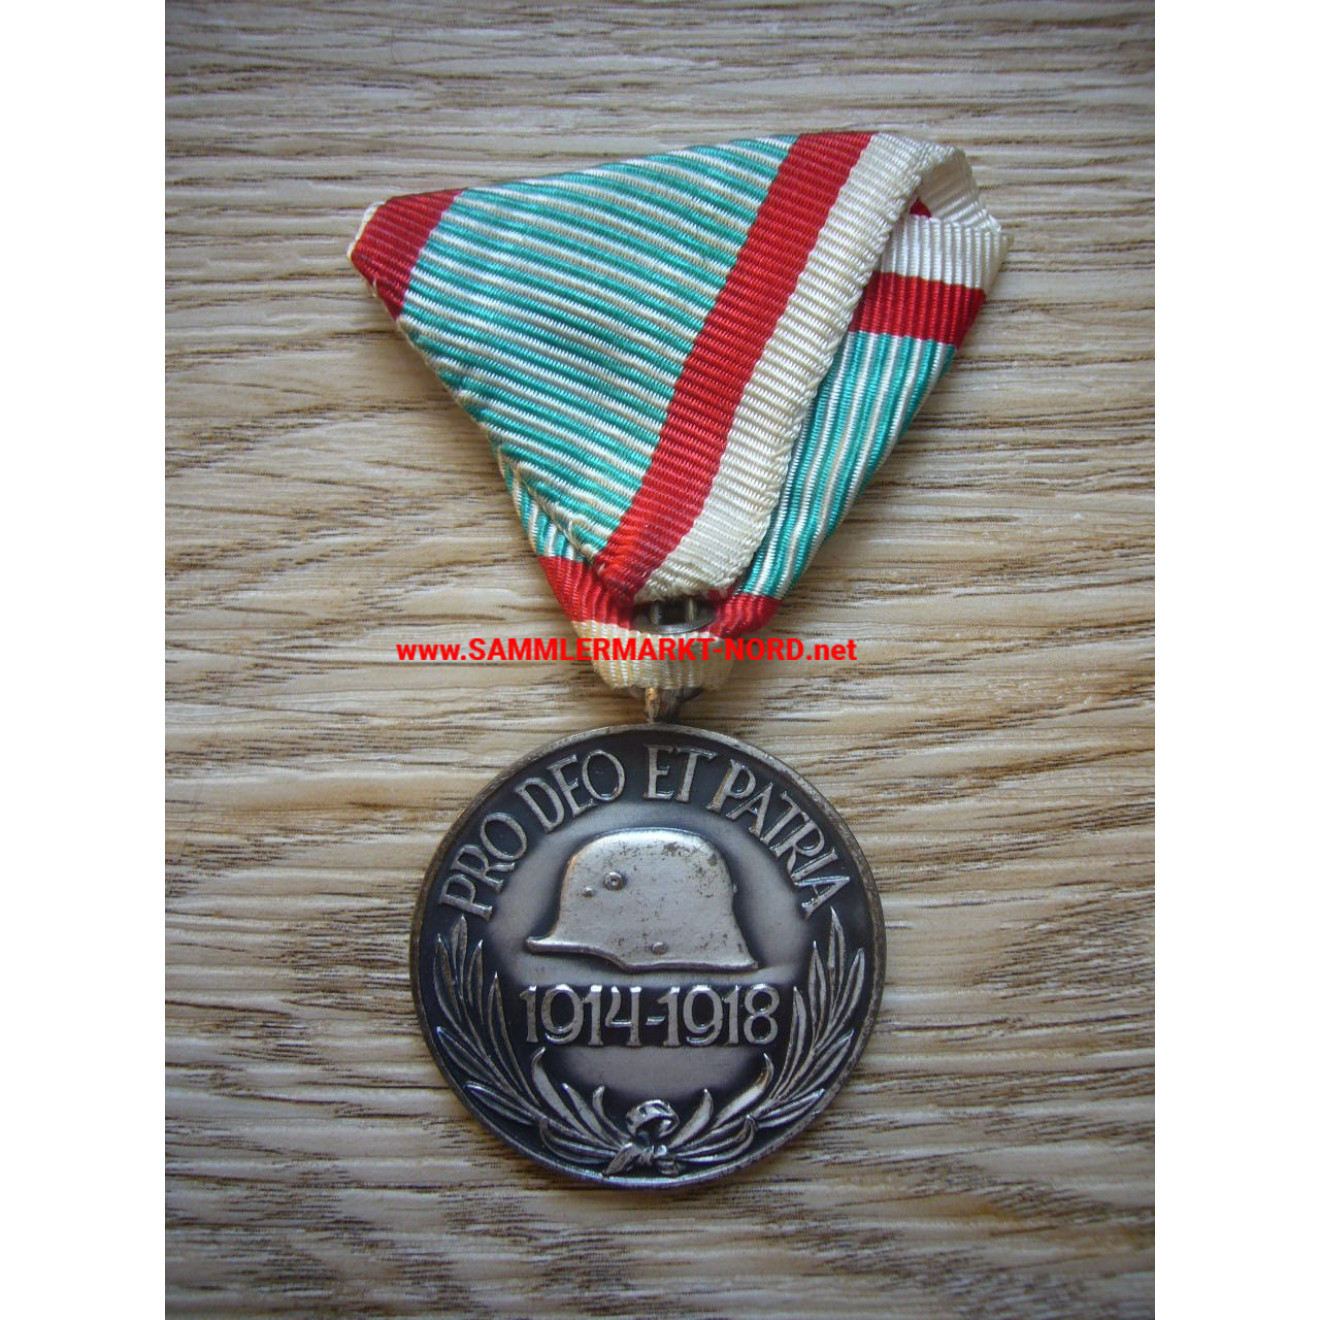 Hungary - World War Memorial Medal 1914-1918